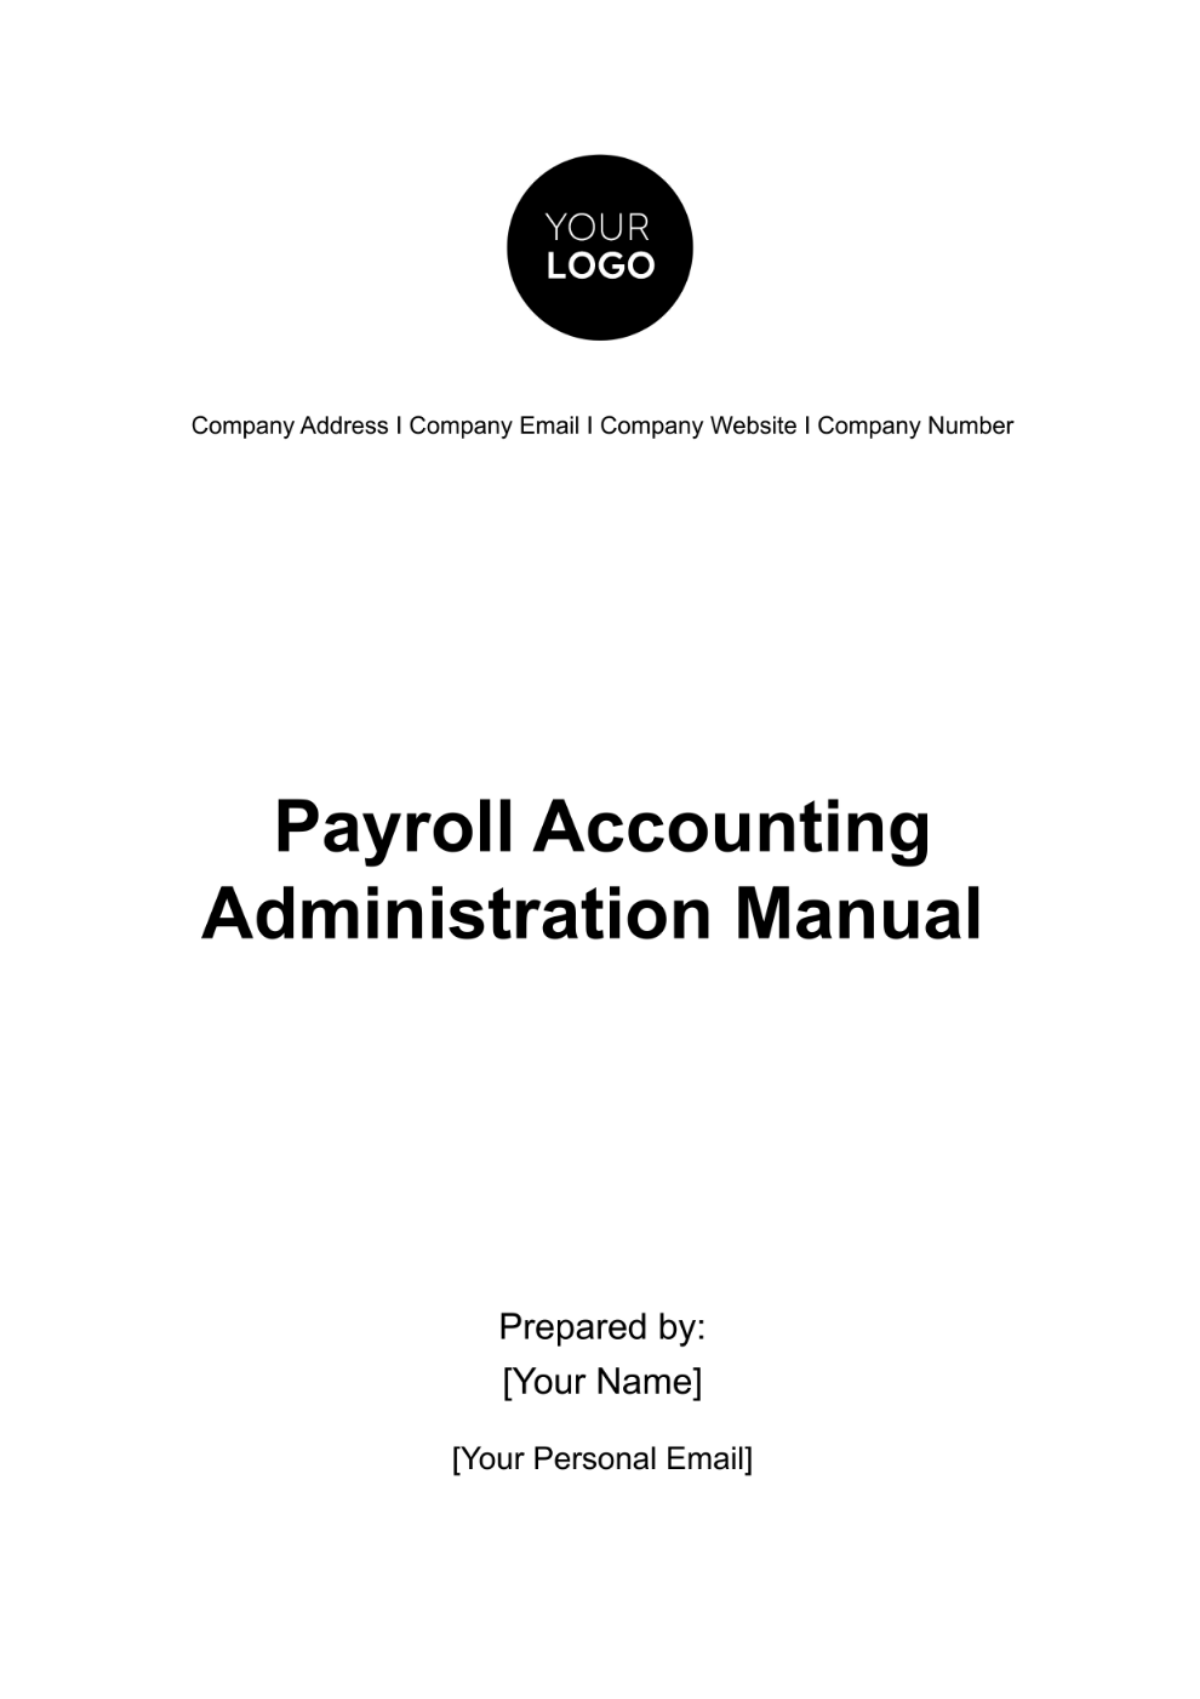 Free Payroll Accounting Administration Manual Template